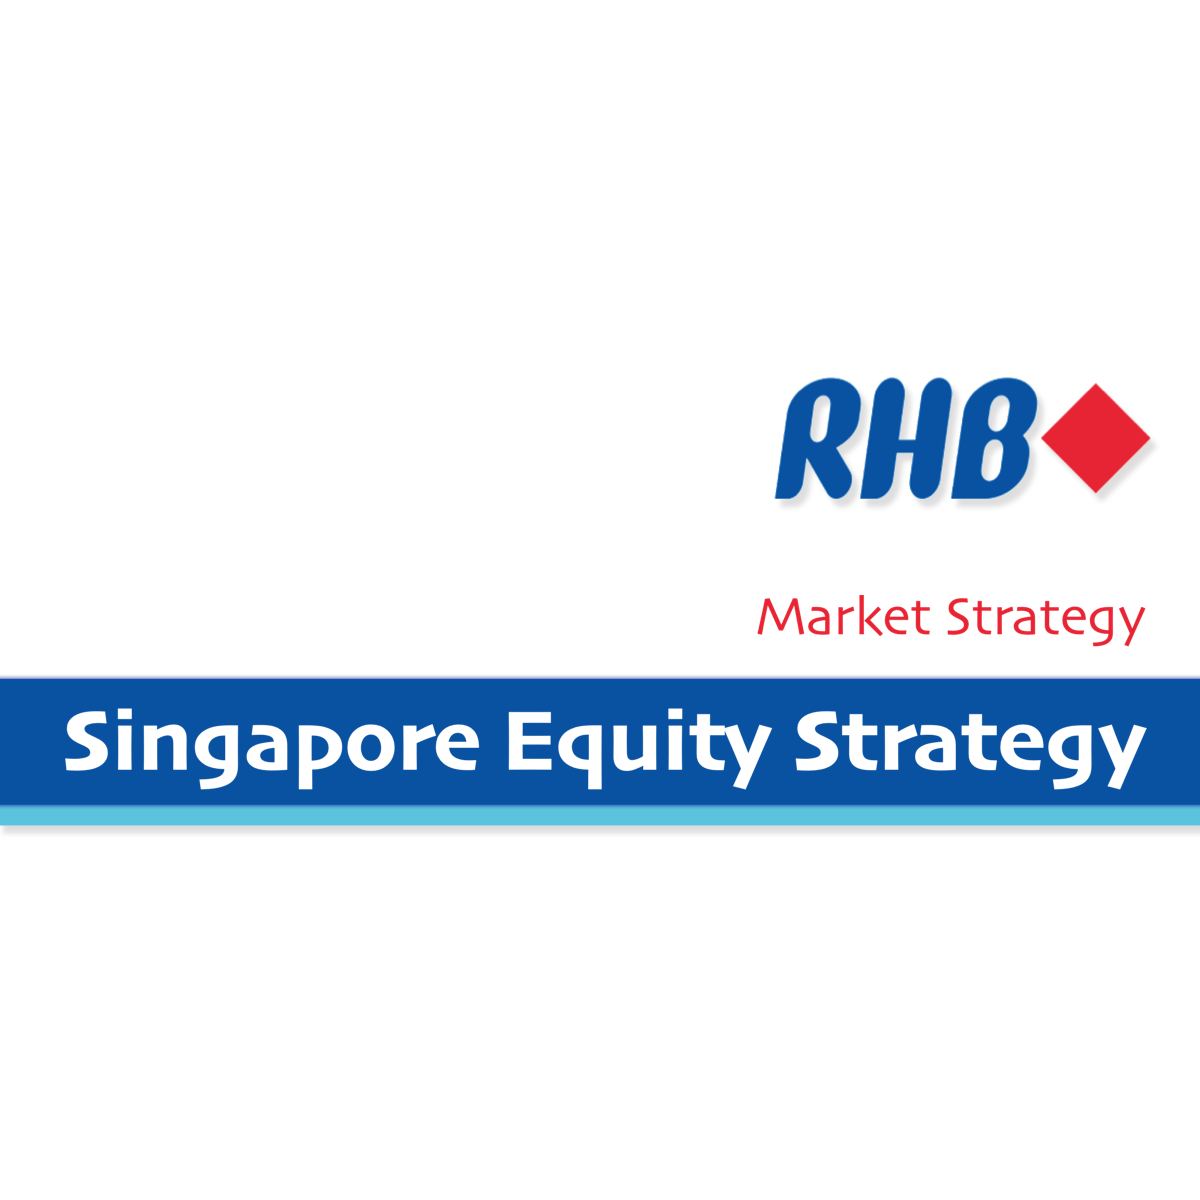 Singapore Market Strategy - RHB Investment Research | SGinvestors.io